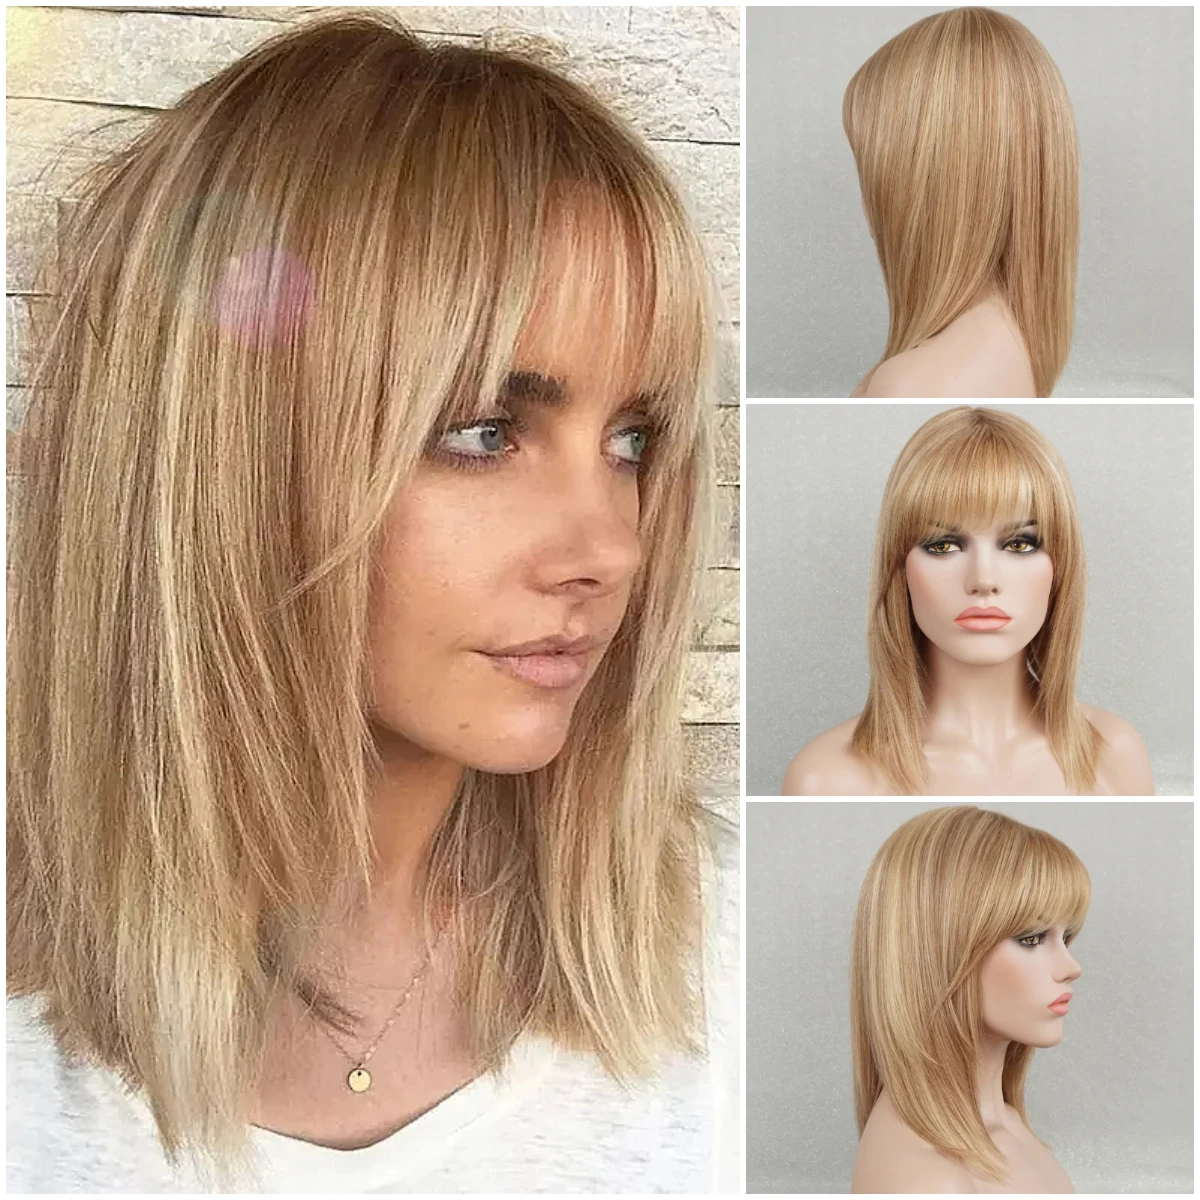 

Full Wig Blonde Human Hair Bob Cut Glueless Wig Cap 130 Density 12 in Medium Length with Bang Blonde Highlights Wig for Women